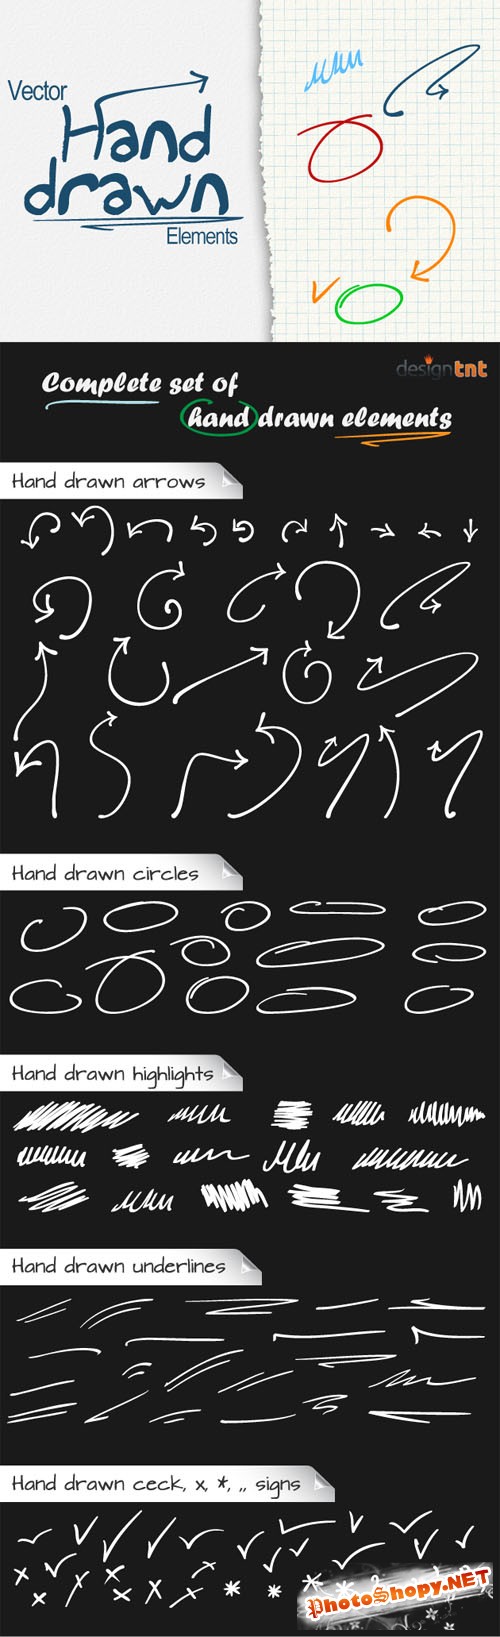 Designtnt - Vector Hand Drawn Elements